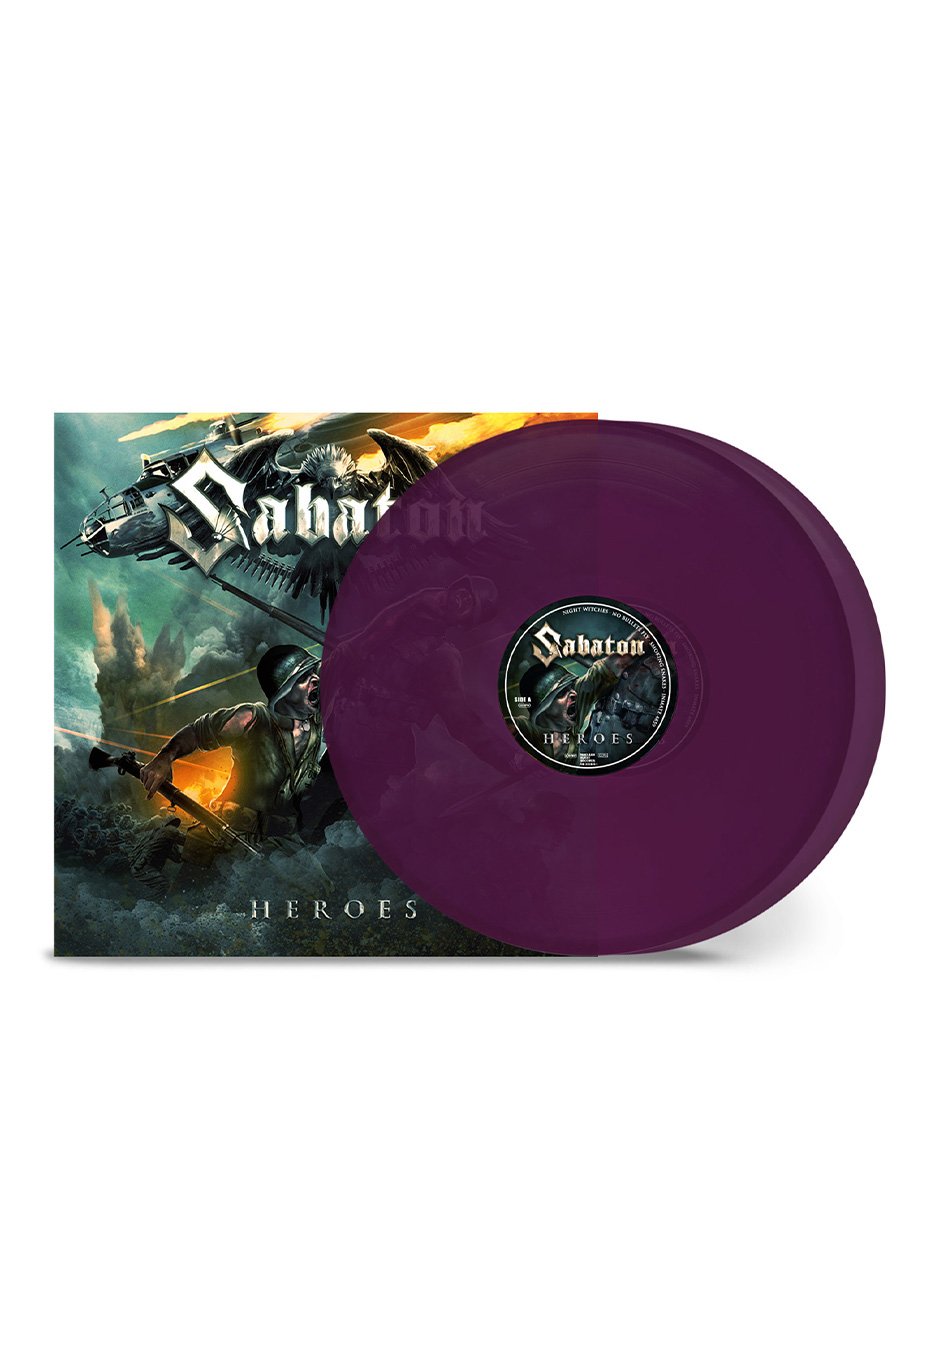 Sabaton - Heroes (10th Anniversary) Ltd. Transparent Violet - Colored 2 Vinyl